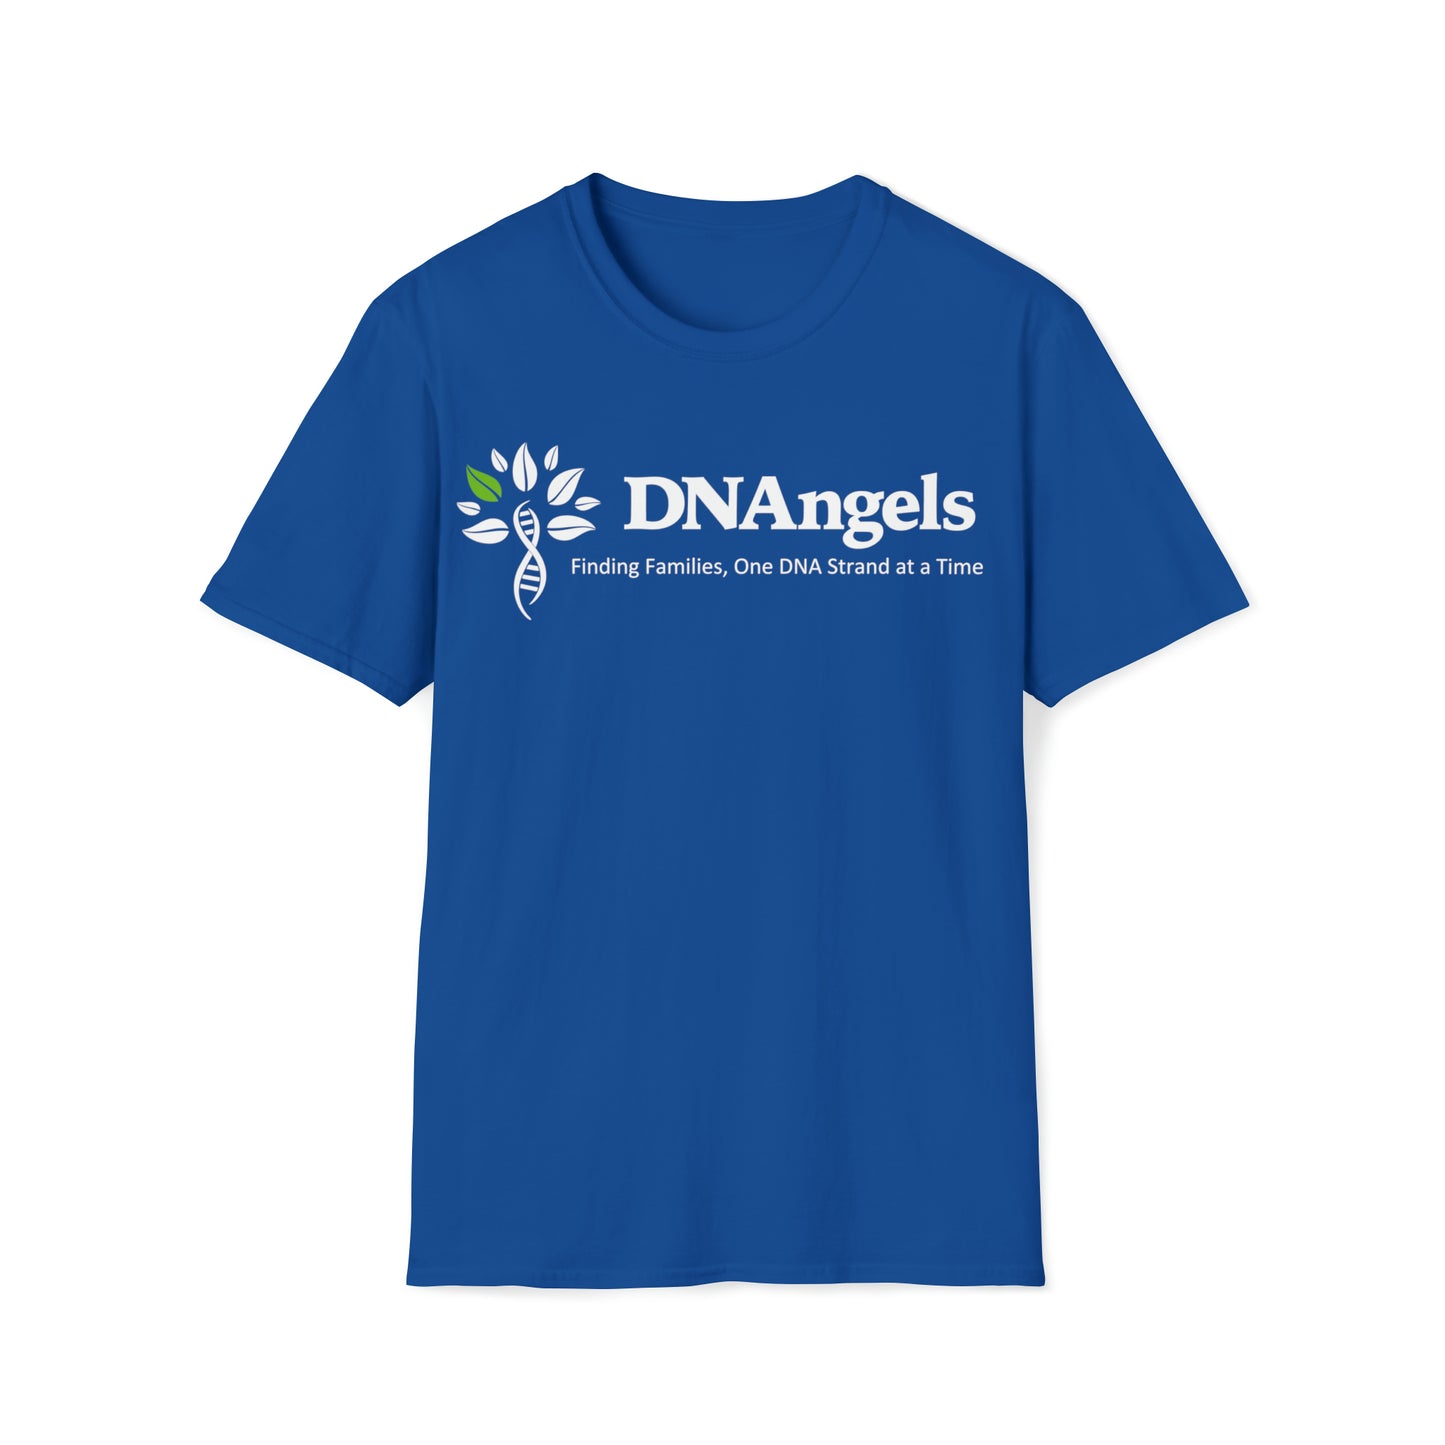 DNAngels T-Shirt with Tagline